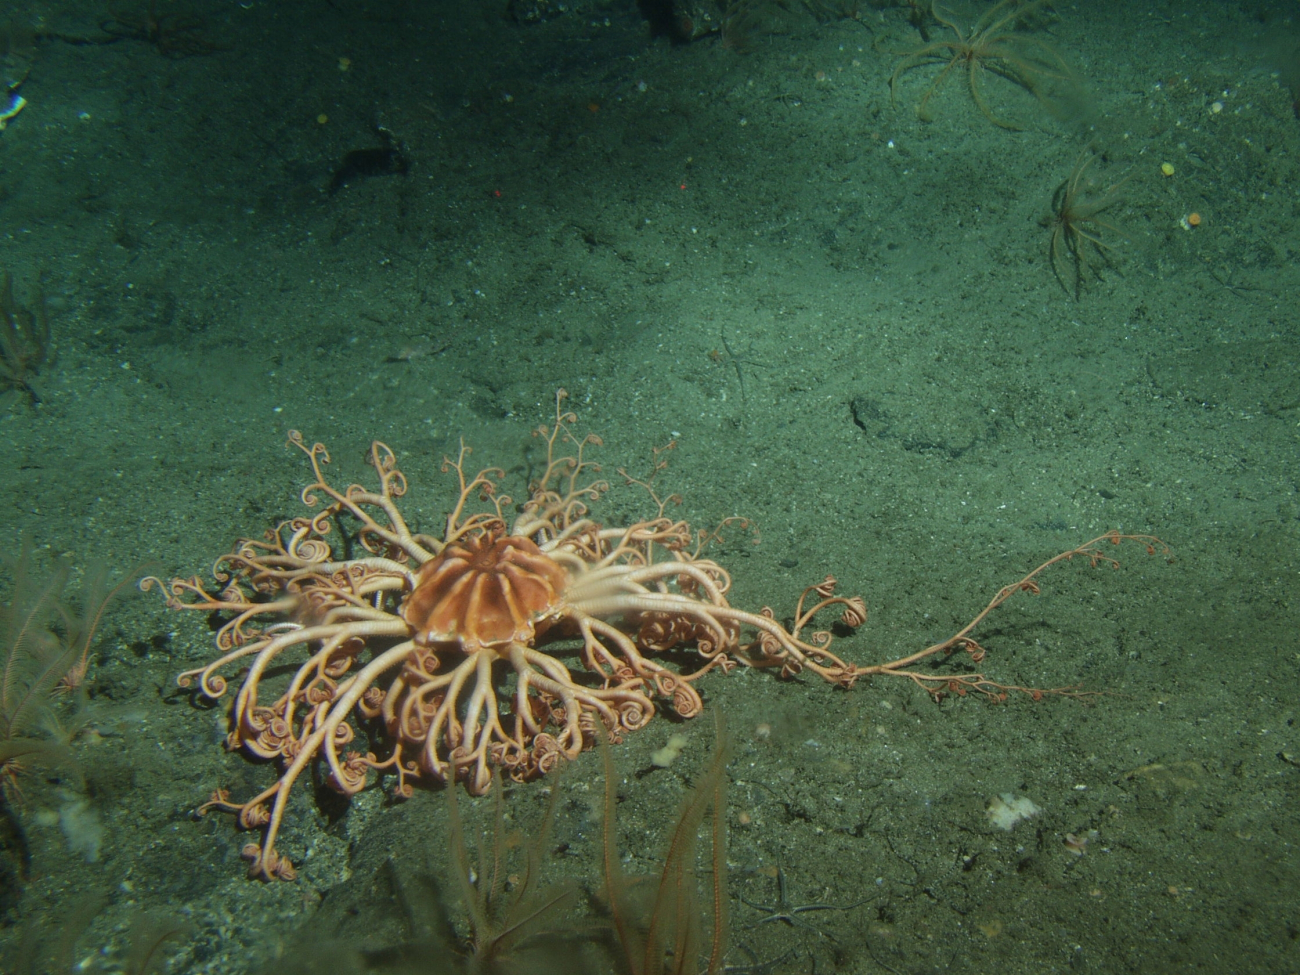 Basket sea star (Gorgonocephalus eucnemisin) soft bottom habitat